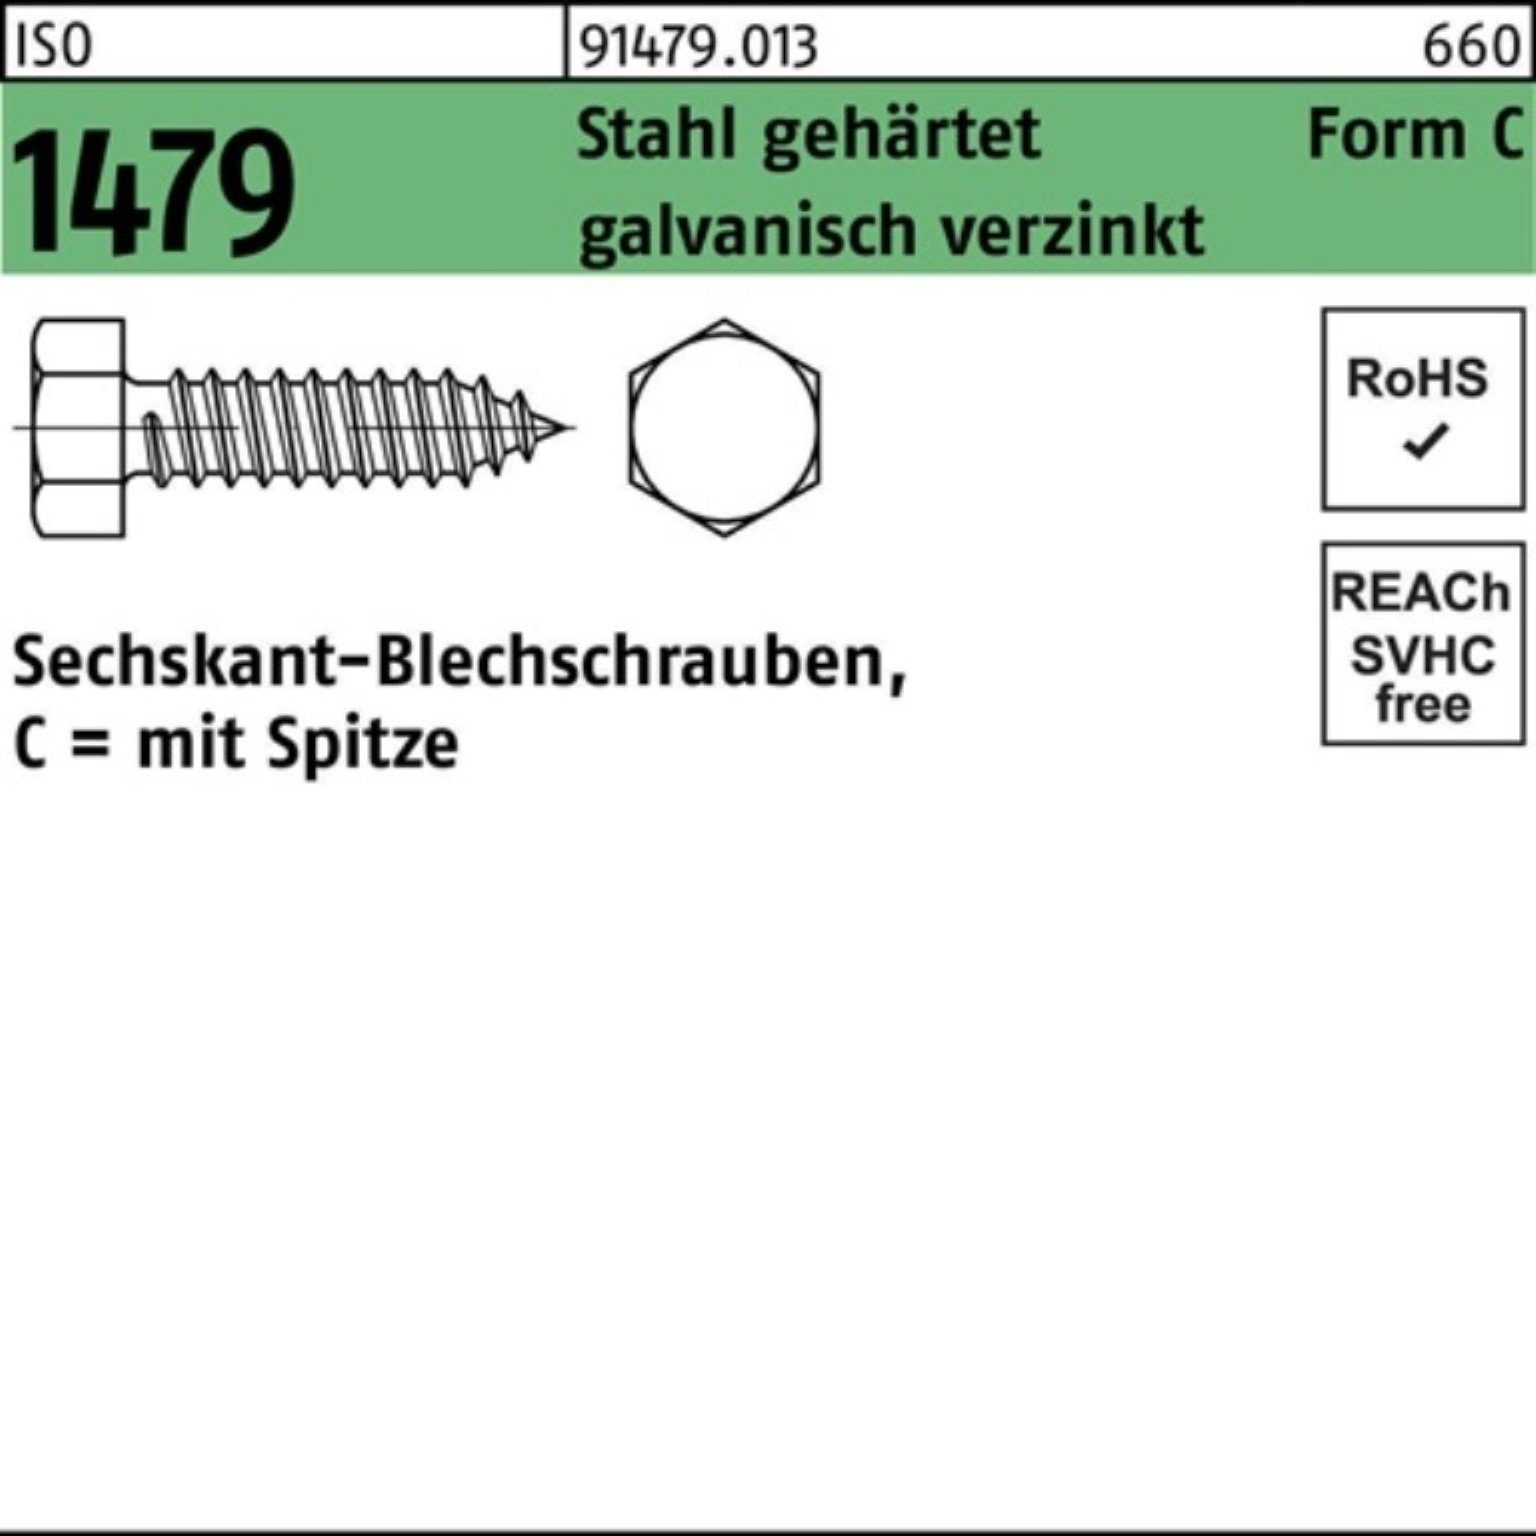 Reyher Blechschraube 250er Blechschraube Spitze/6-kt C Pack 8x25 1479 gehärtet ISO Stahl g